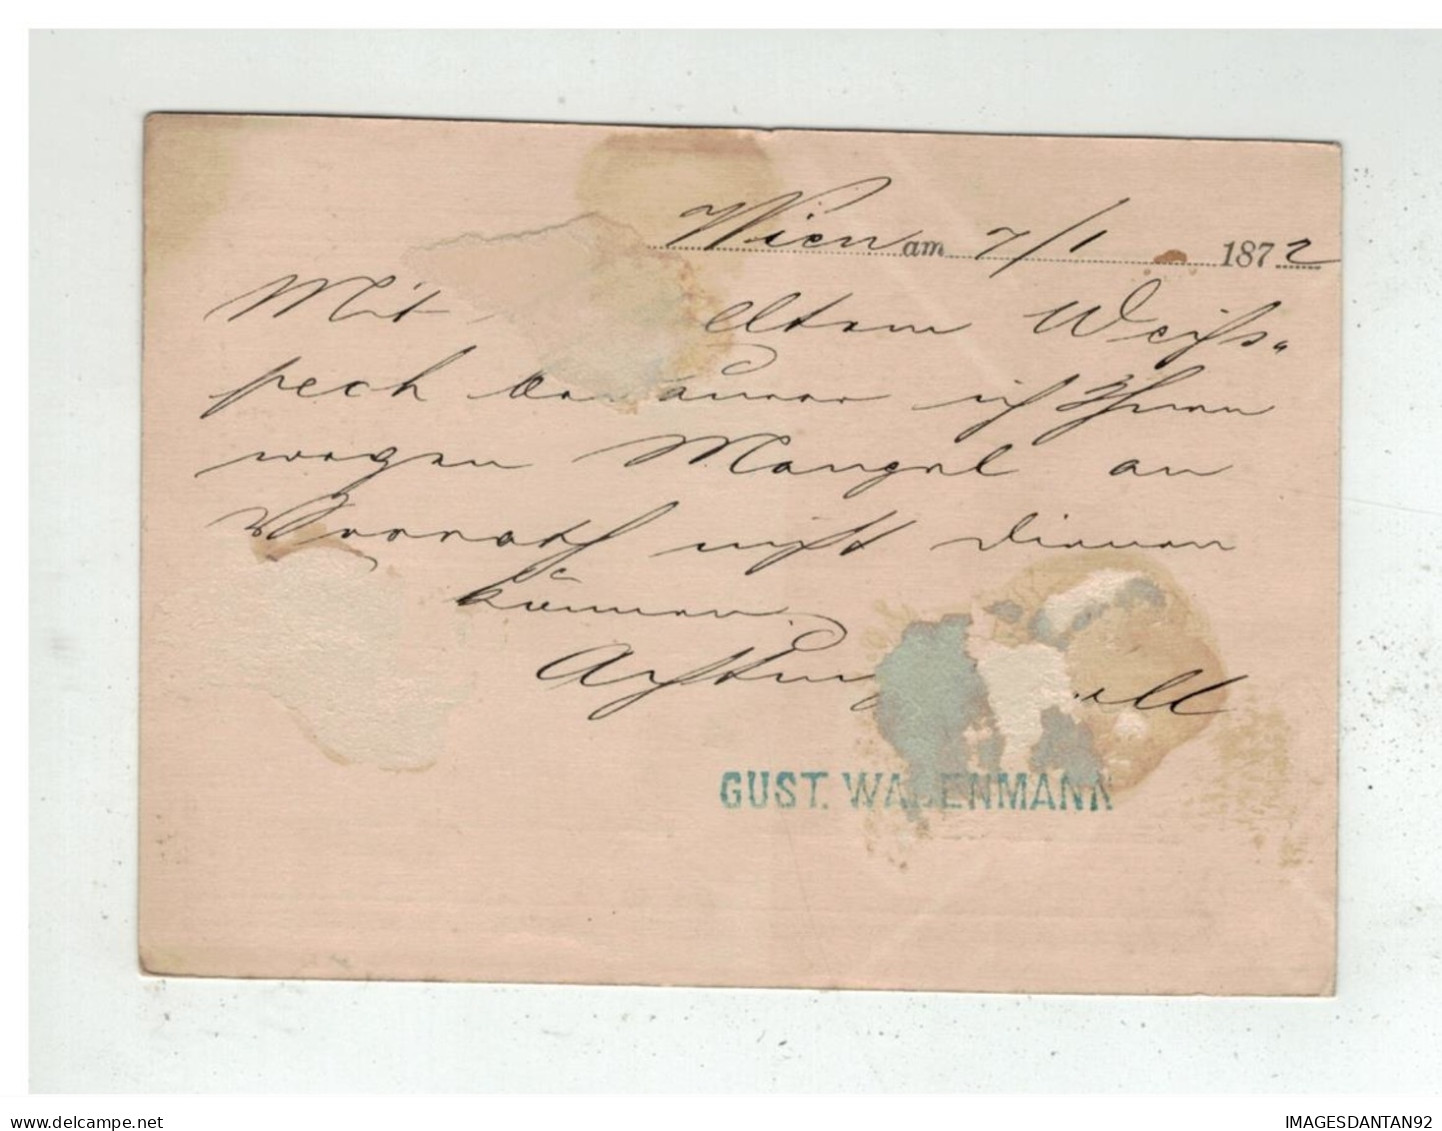 Autriche - Entier Postal 2 Kreuser De WIEN à Destination De KARLSTADT KARLOVAC CROATIA 1872 - Ganzsachen